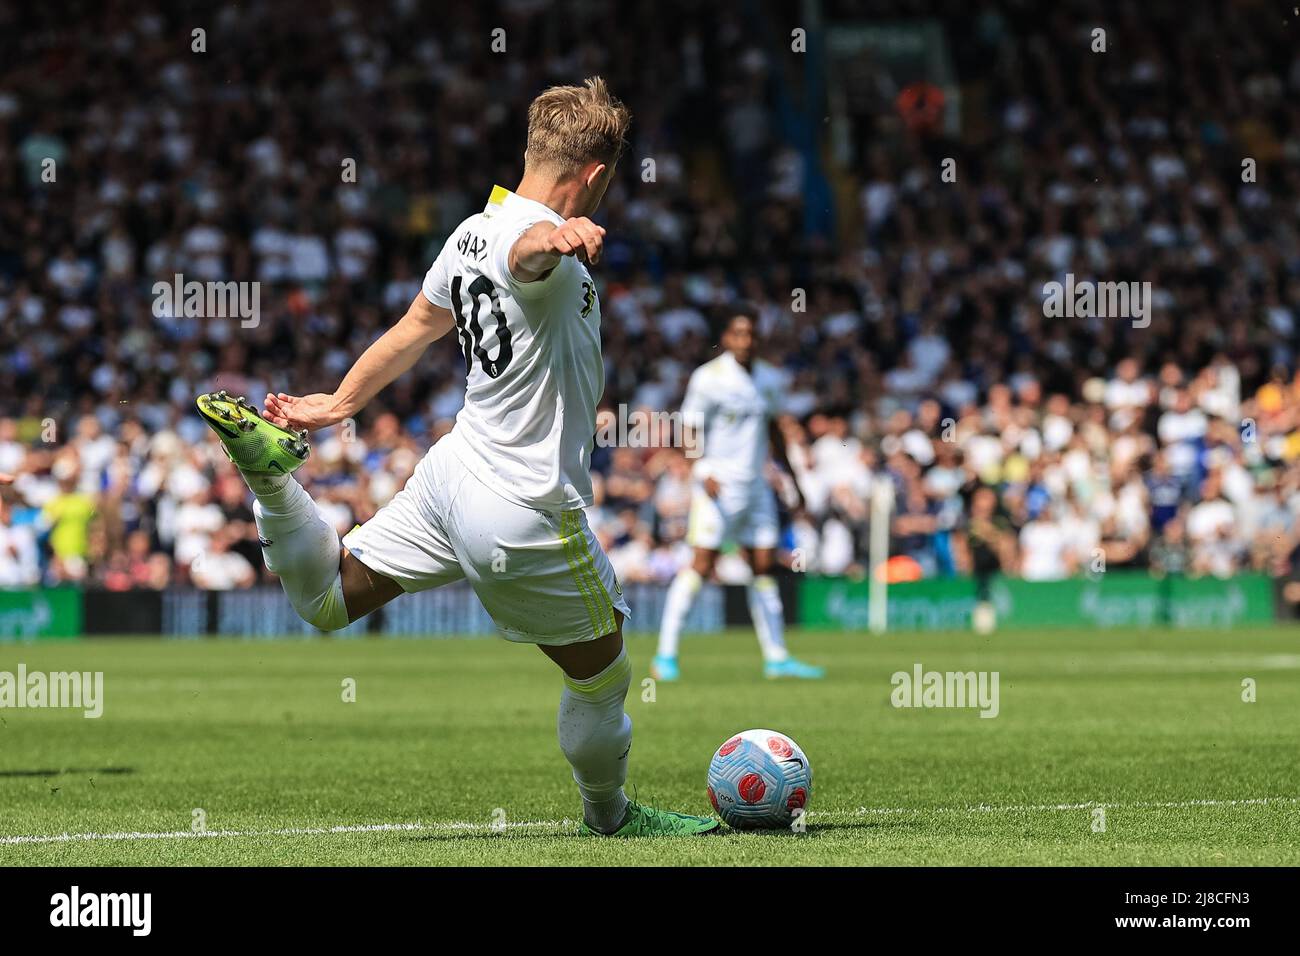 Joe Gelhardt #30 of Leeds United shoots on goal, missed chance Stock Photo